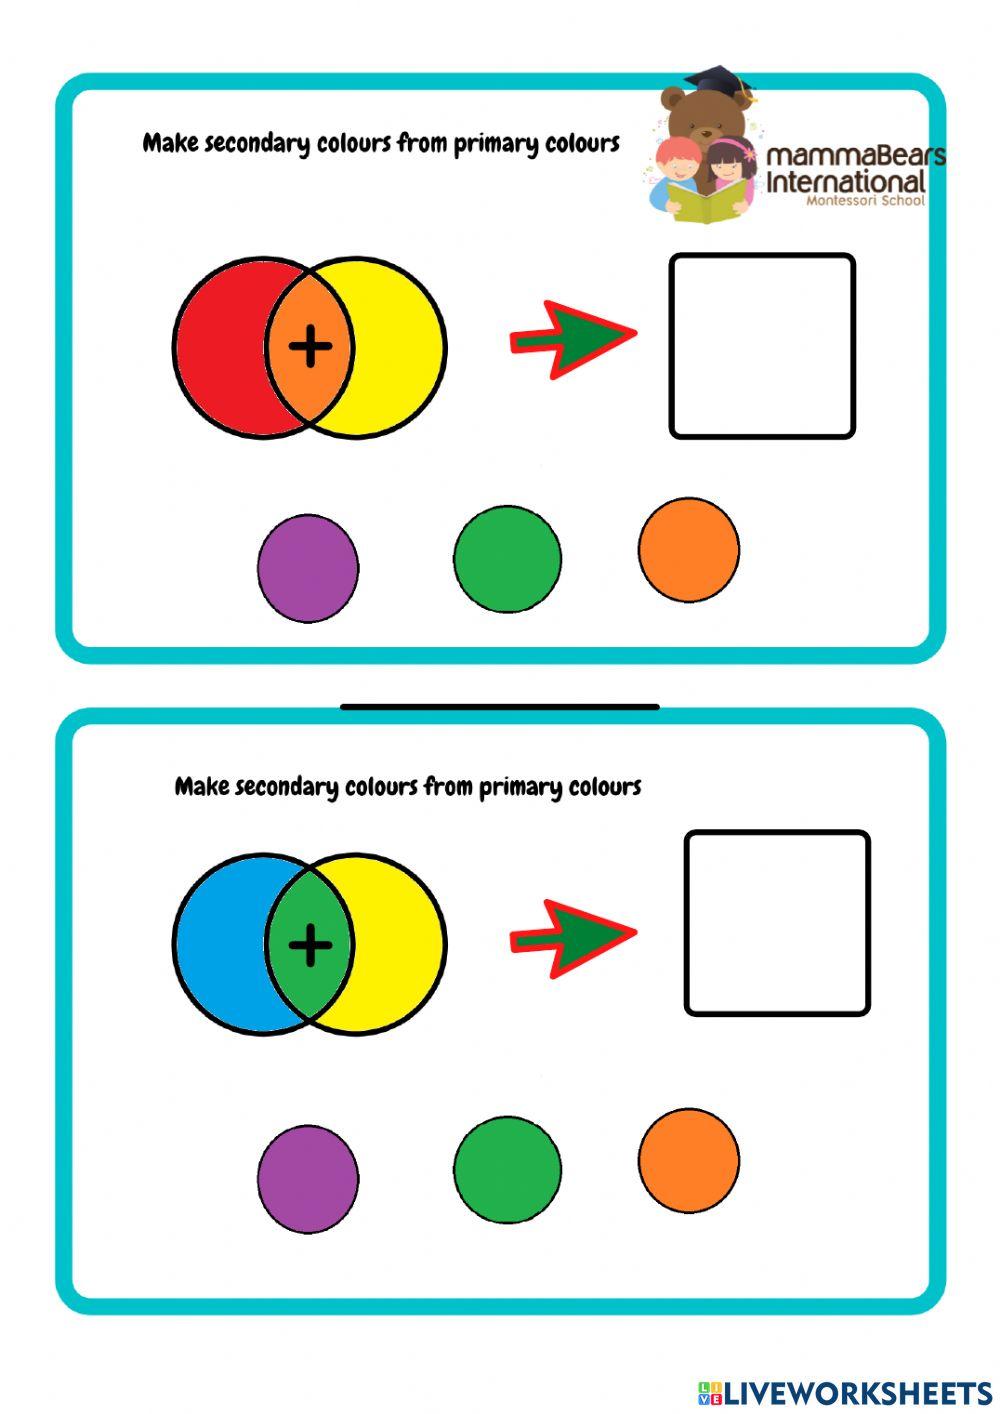 Make secondary colours